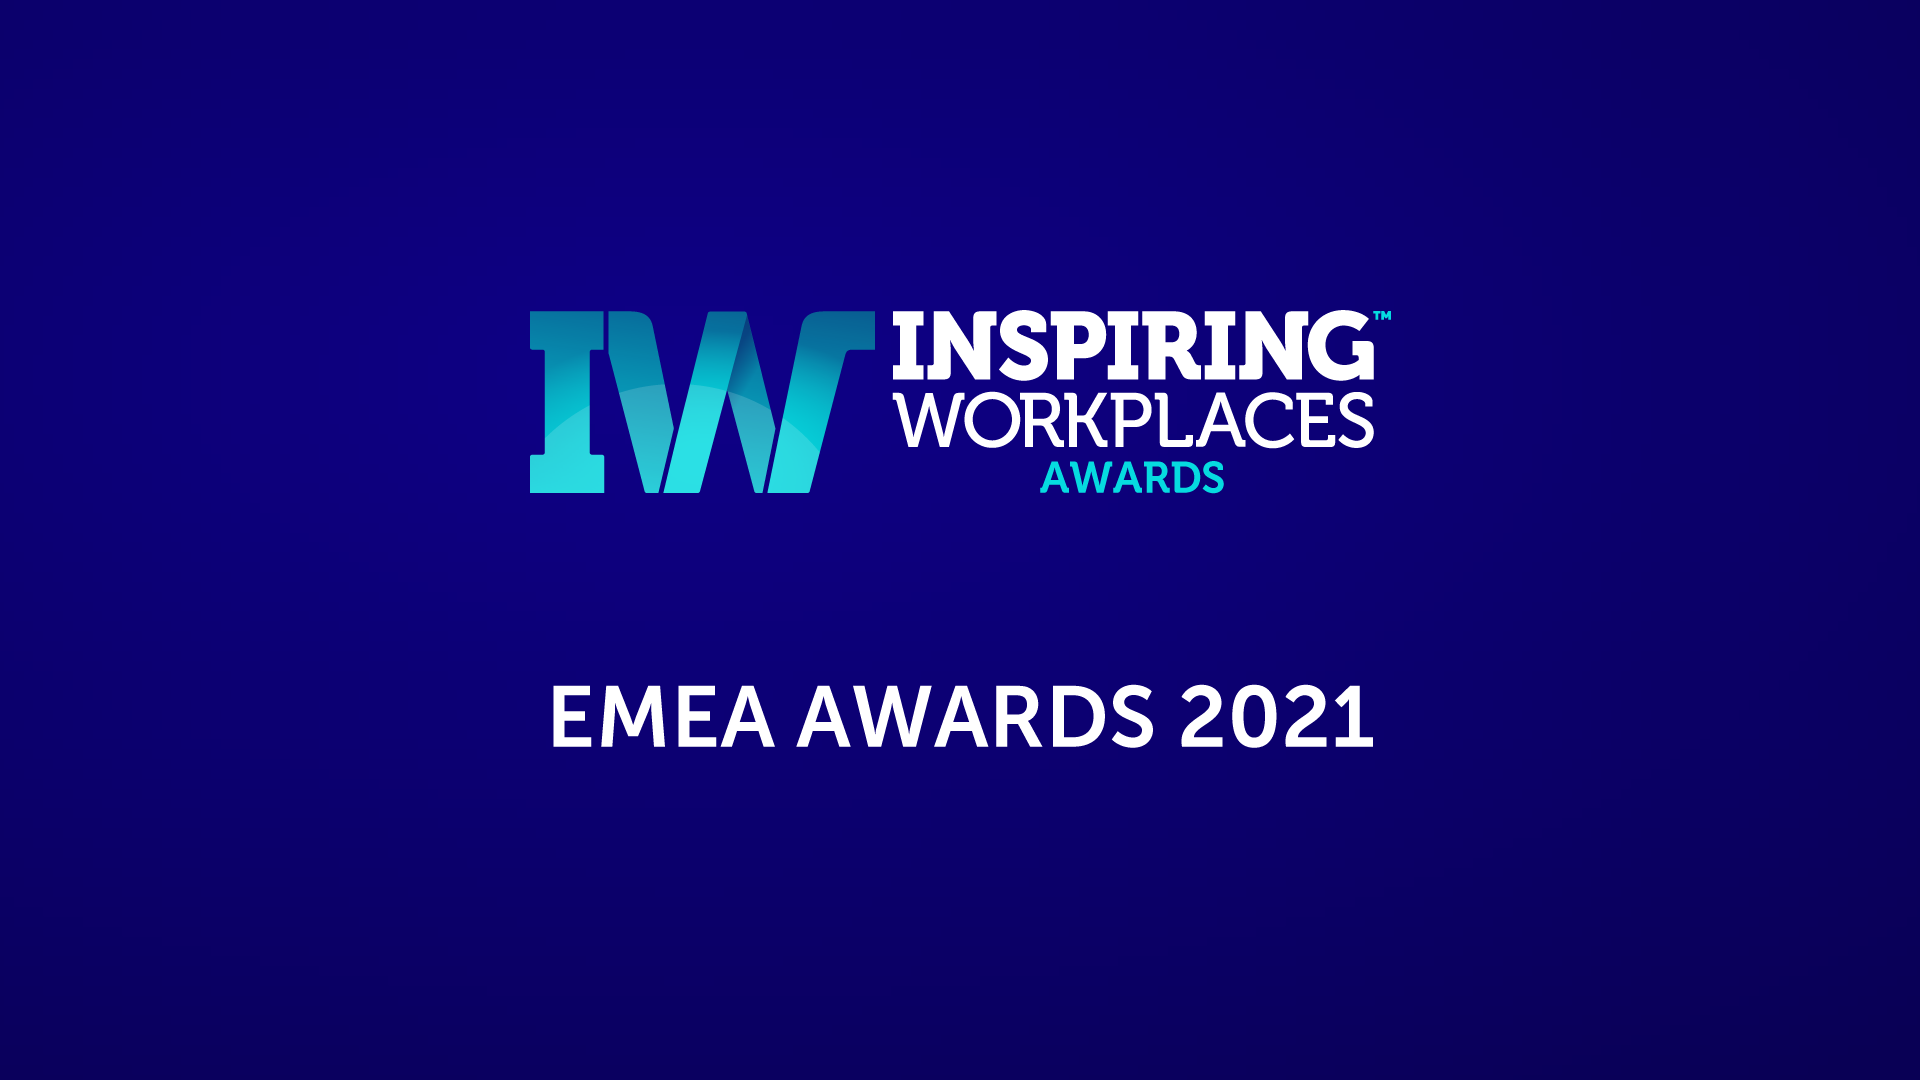 Inspiring Workplaces Awards EMEA 2021 Virtual Ceremony